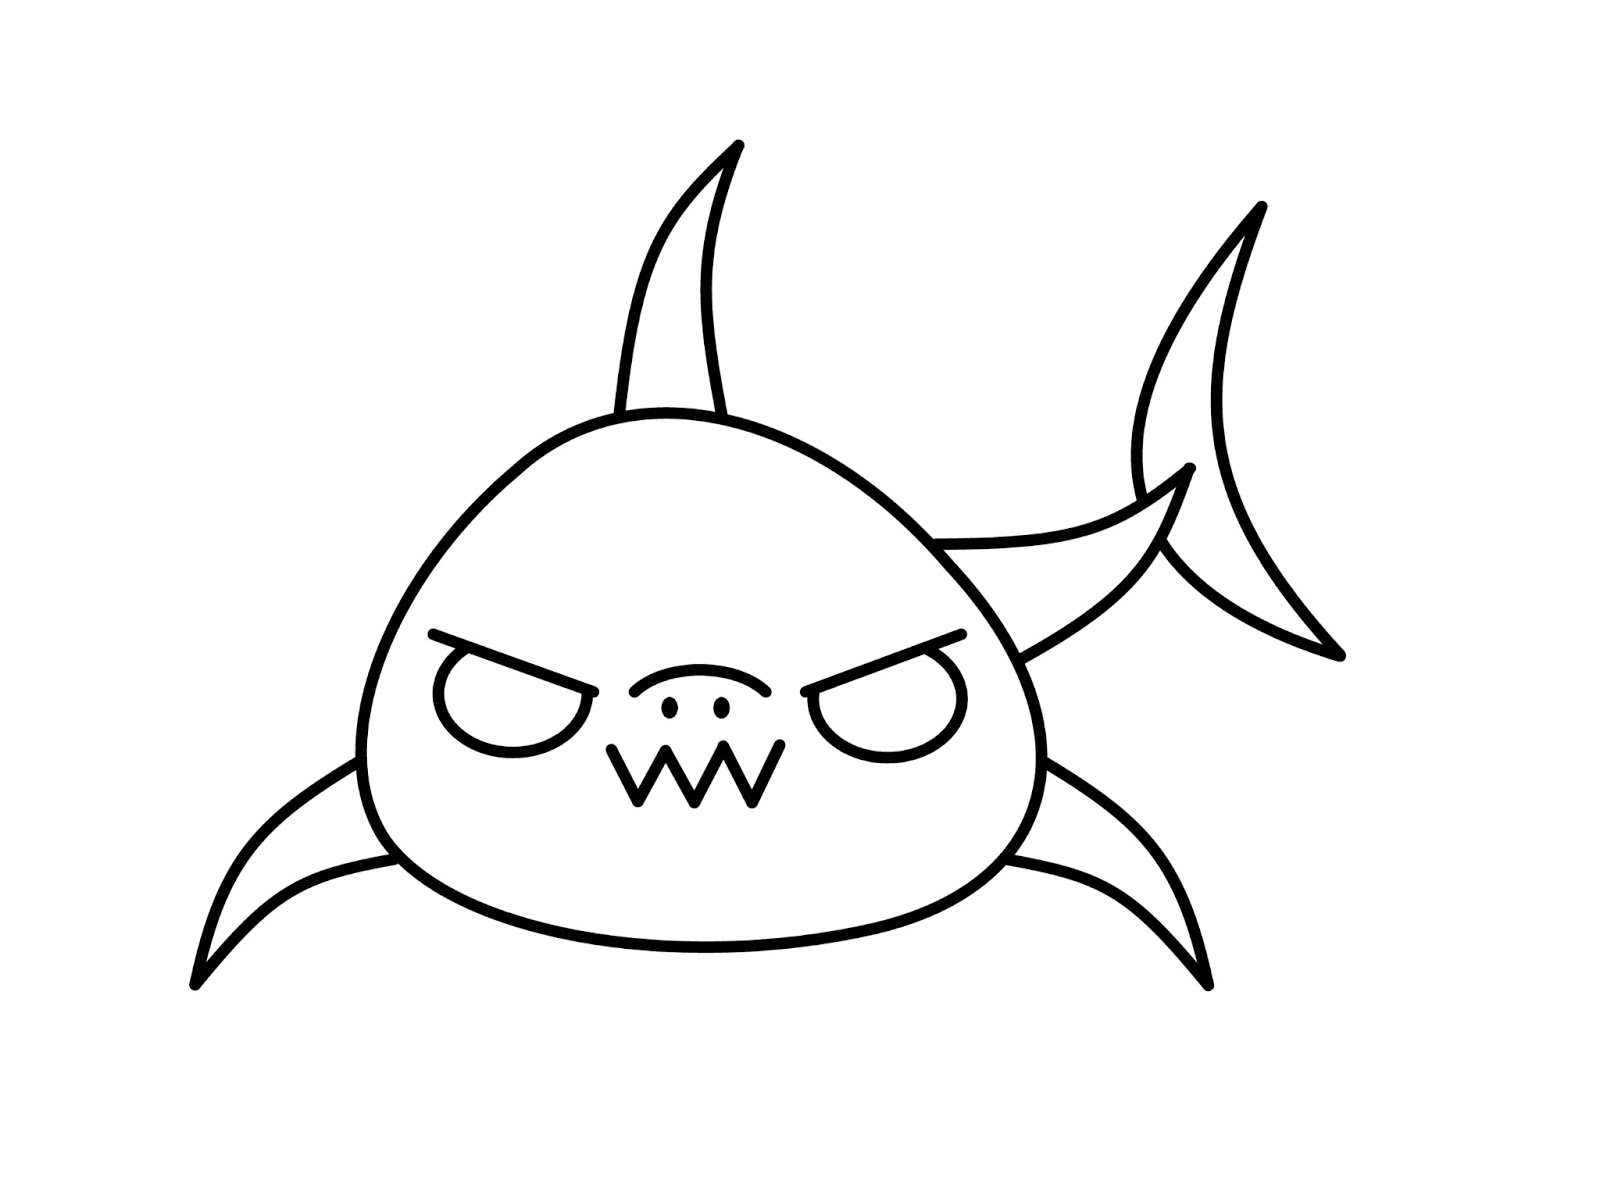 Cute N Kawaii: How To Draw A Kawaii Shark